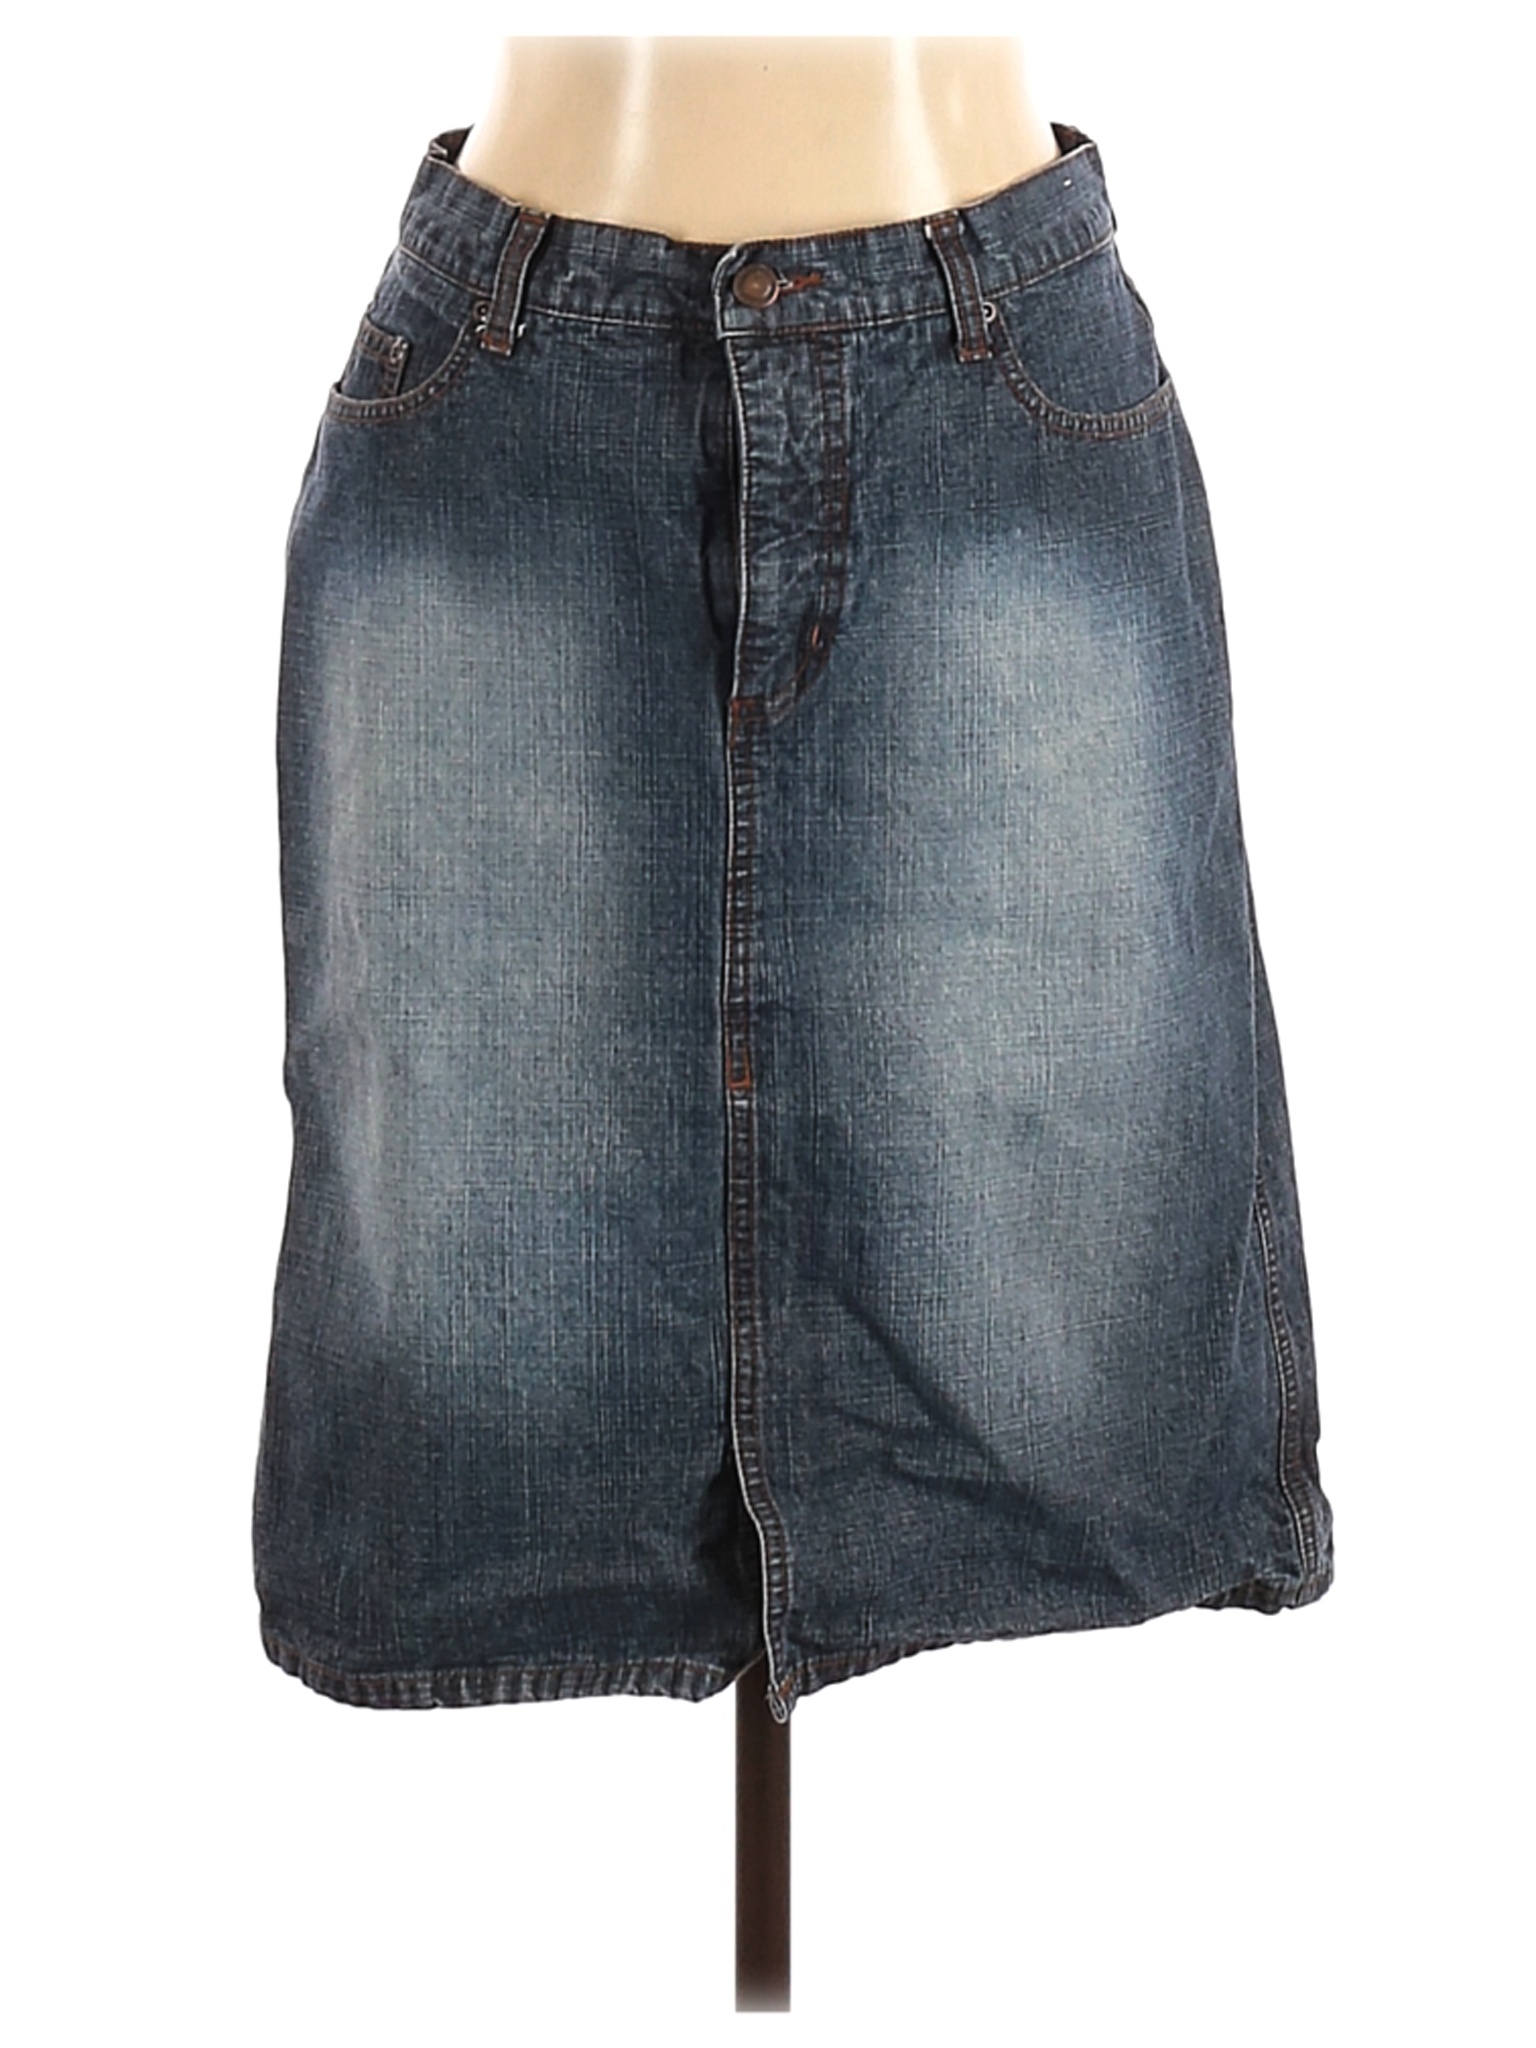 Tommy Hilfiger Women Blue Denim Skirt 10 | eBay